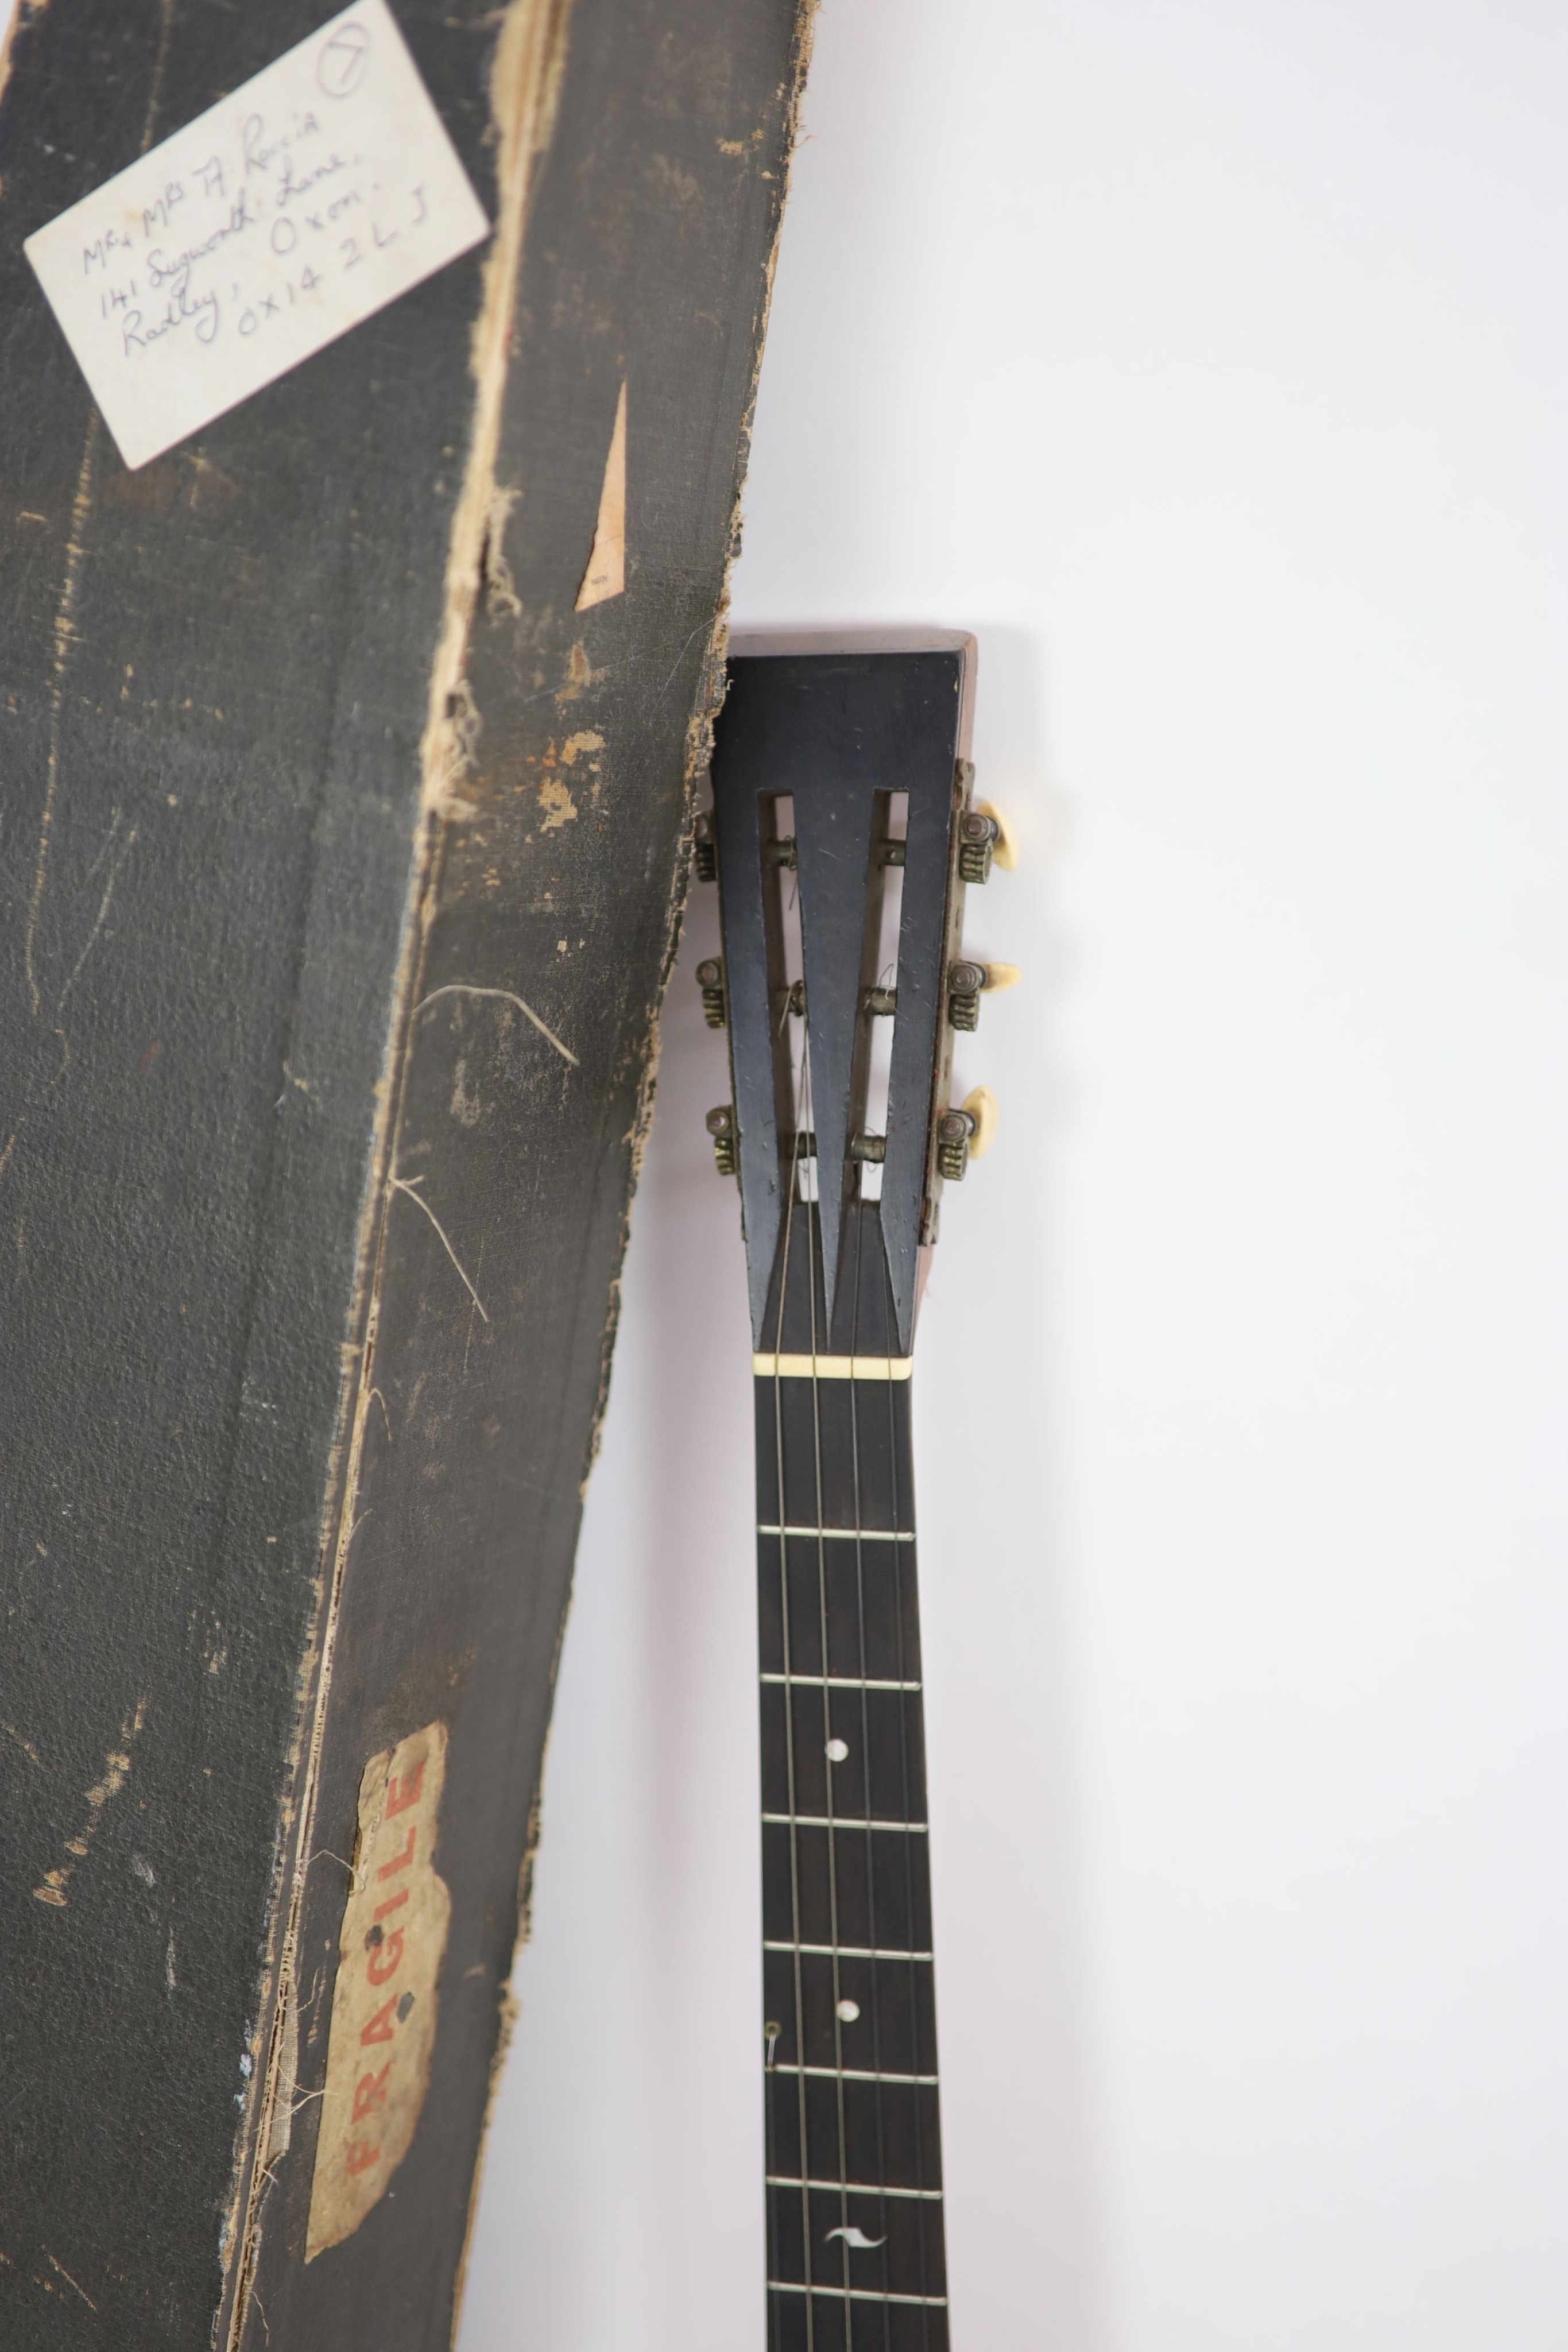 A Cammeyer banjo,nut to bridge 26 inches (bridge missing), 22 frets,length 93cm - Image 3 of 9